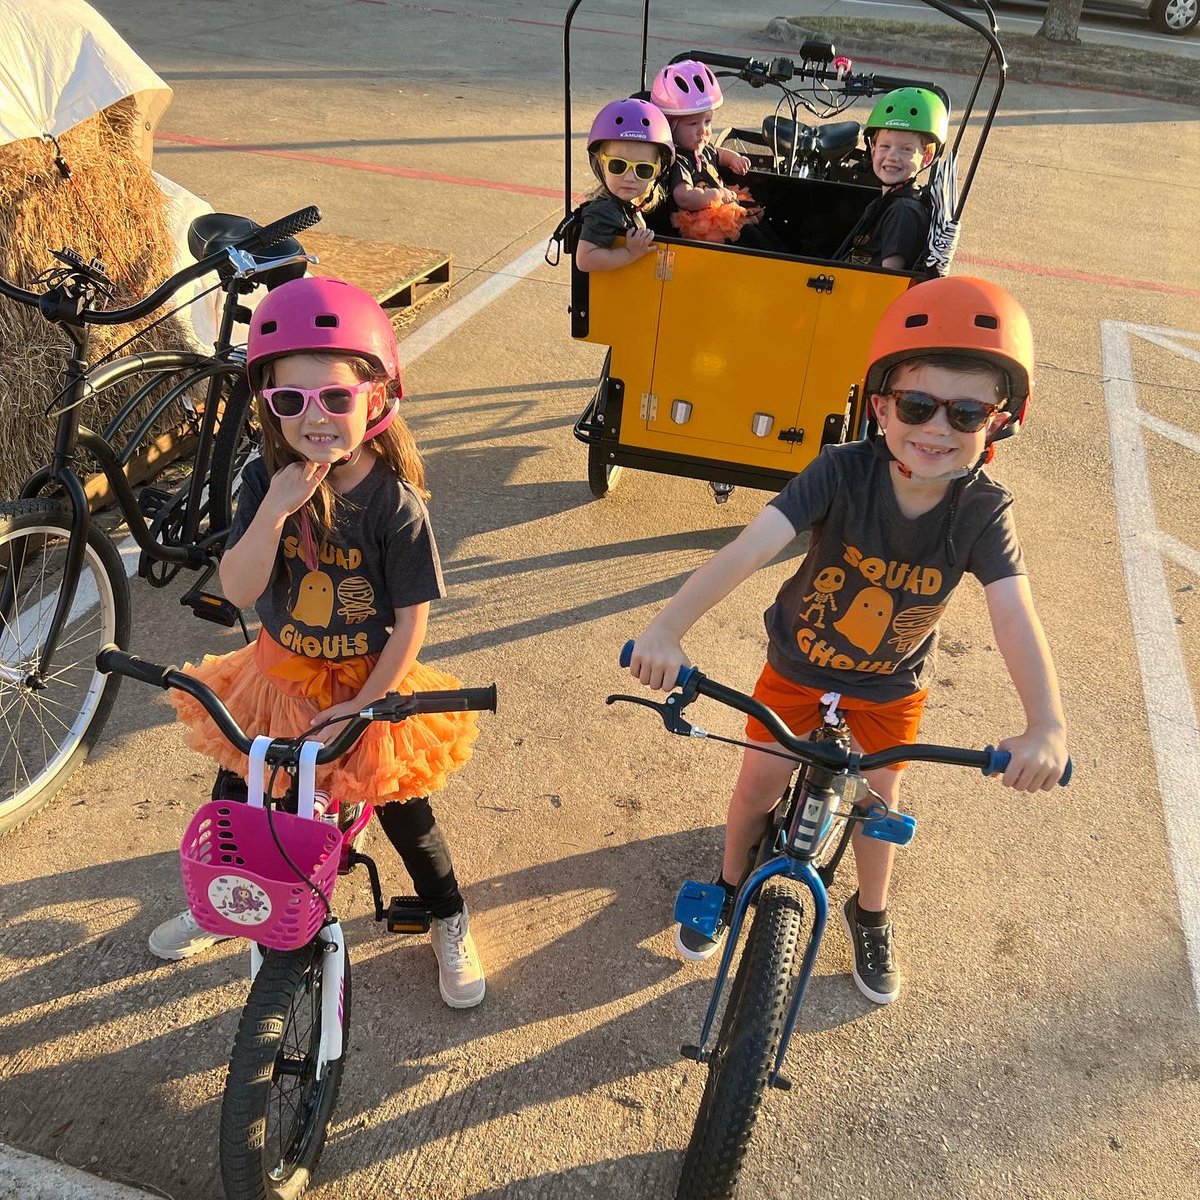 Pumpkin patch fun tonight! Family bike ride to pick out pumpkins to carve! @BunchBikes #familycargobike #bunchbike #carfreechallenge